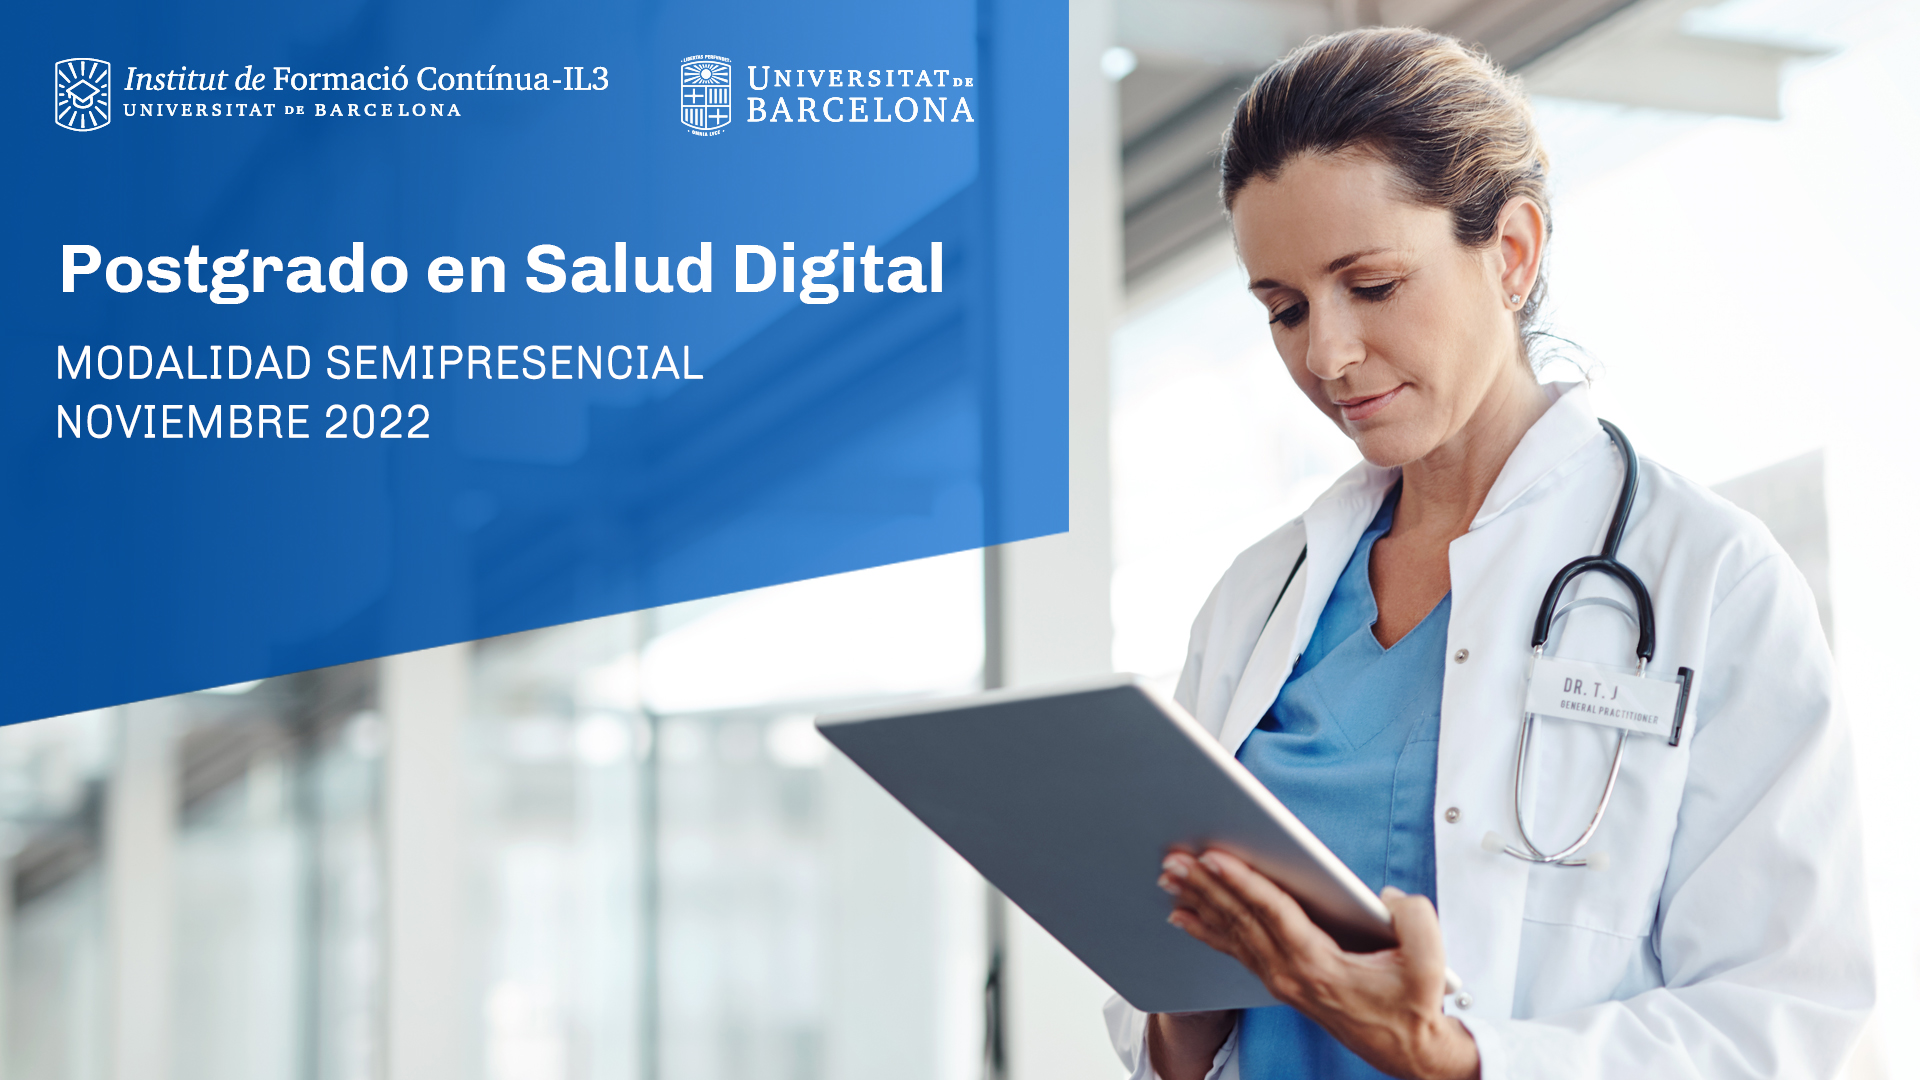 Institut de Formació Continua of the Universitat de Barcelona launches new Postgraduate in Digital Health - #BHHMembersInitiatives